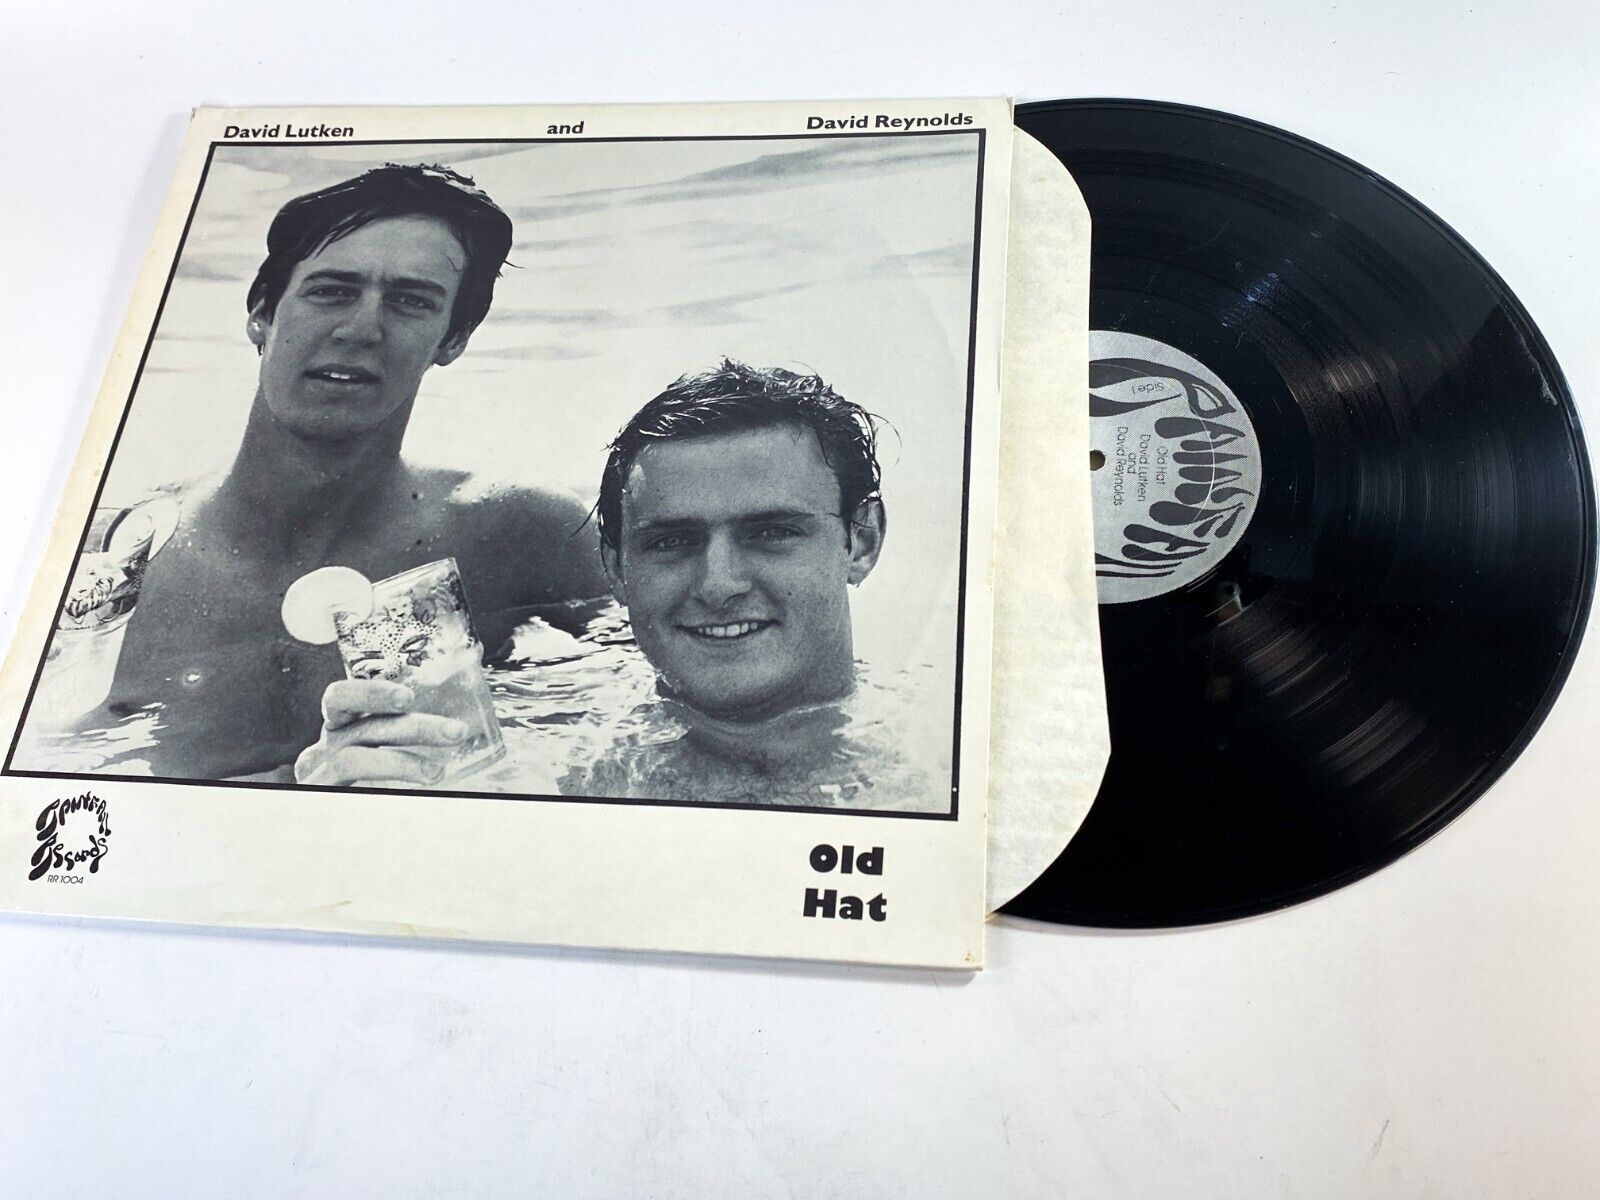 David Lutken and David Reynolds-Old Hat-Vinyl Record EX/EX  Ultrasonic Clean